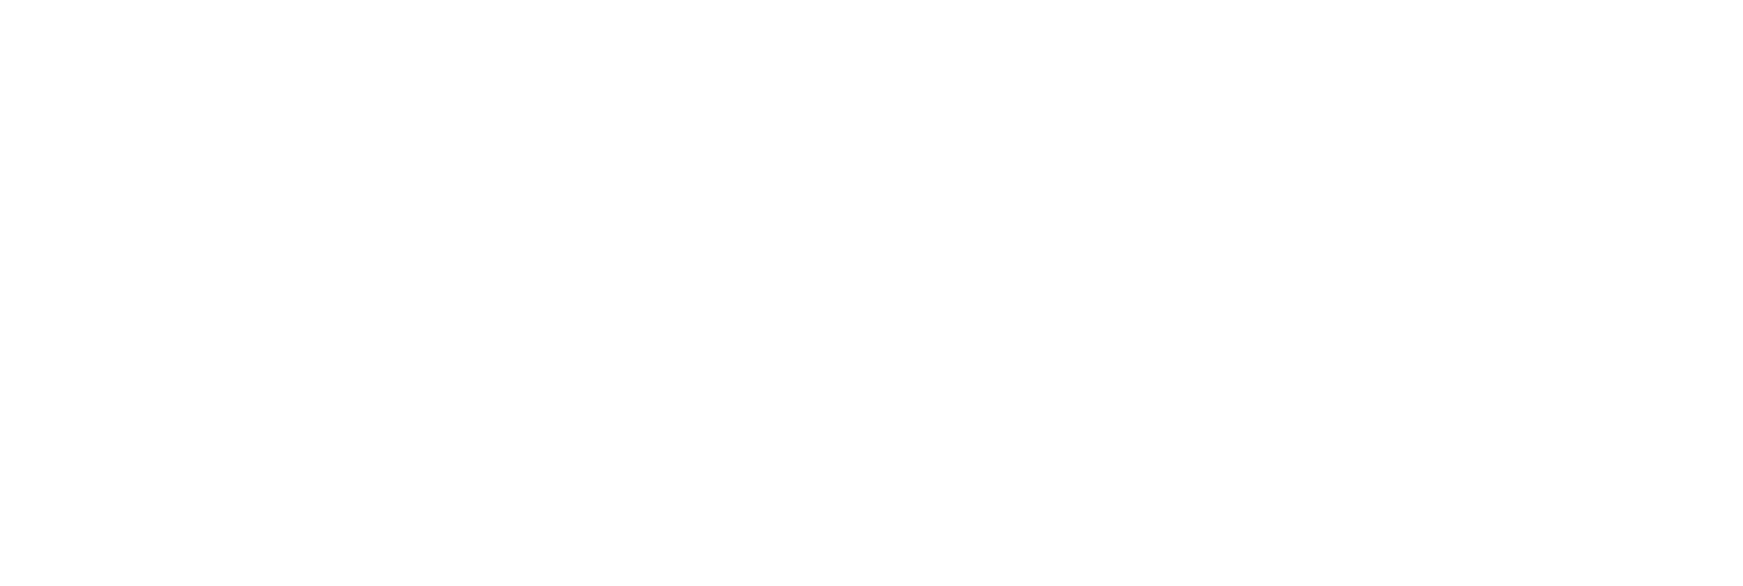 2021 TruPlace -  Premium Property Visuals All white-1